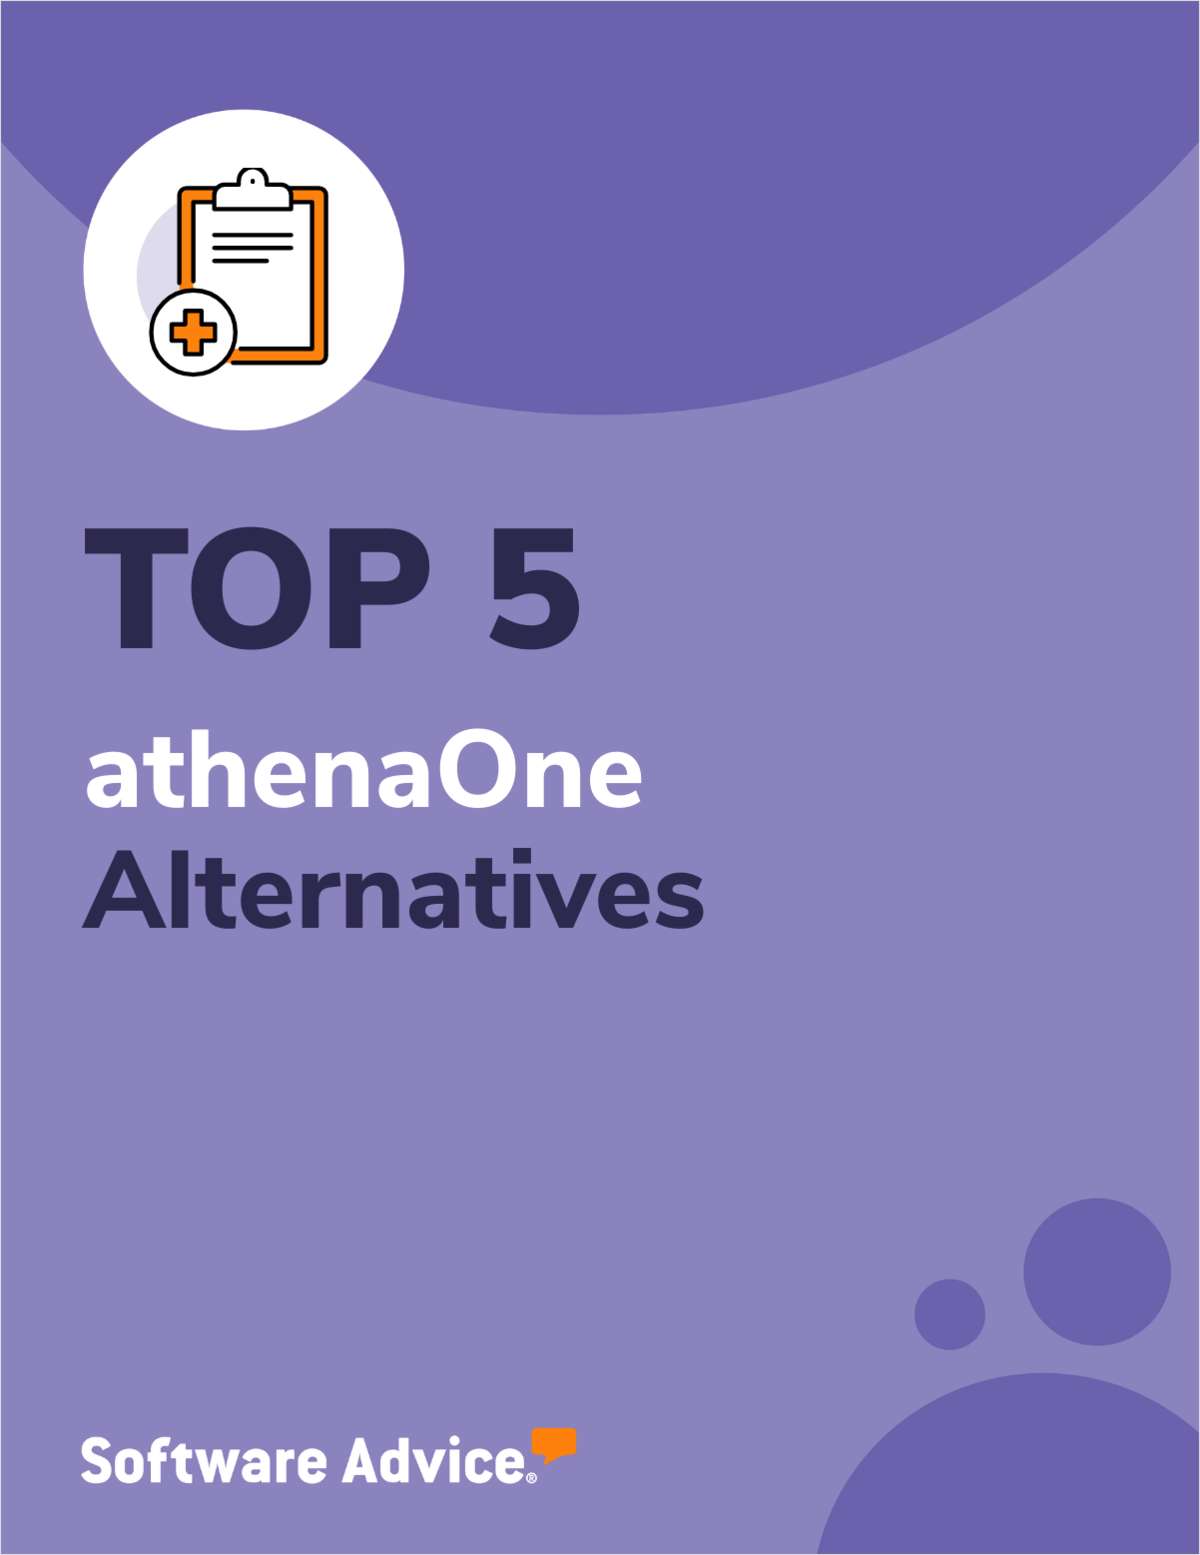 Top 5 athenaOne Alternatives